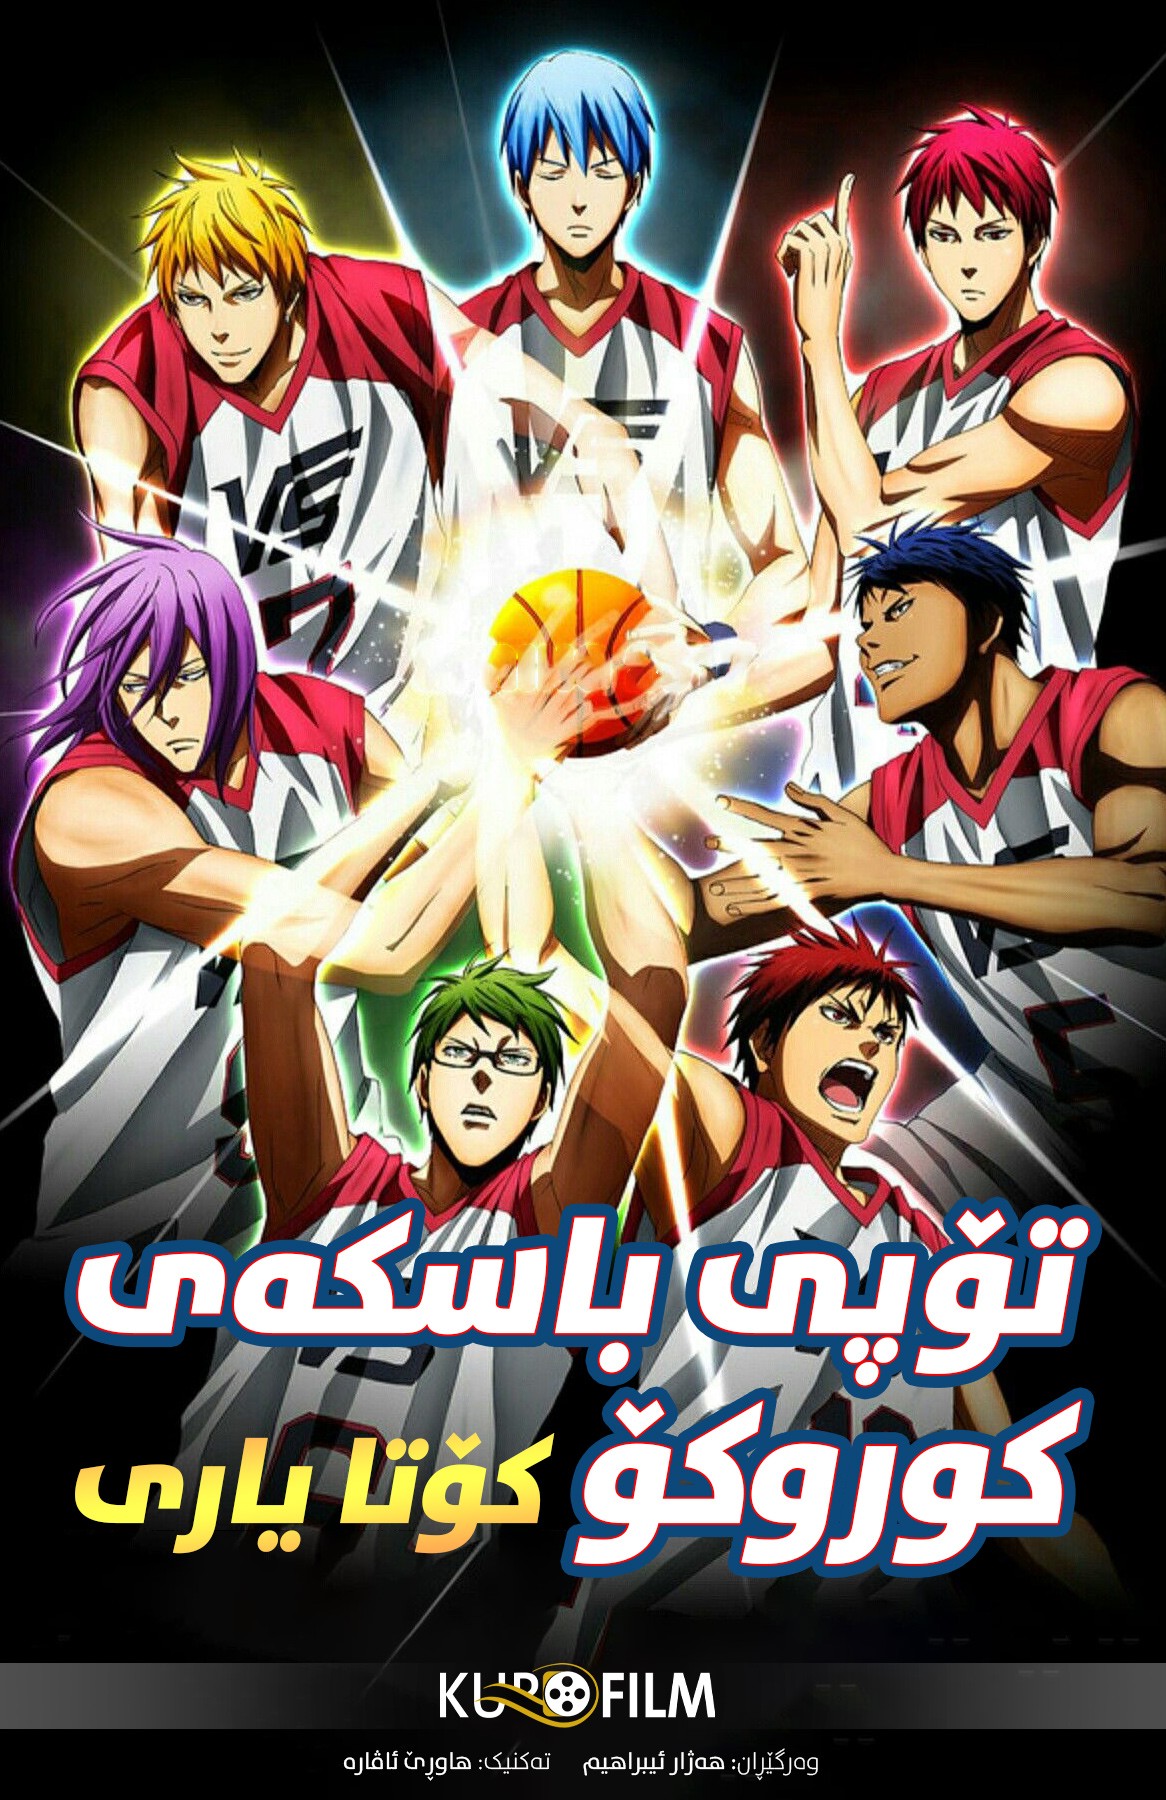 Kuroko's Basketball: Last Game (2017)